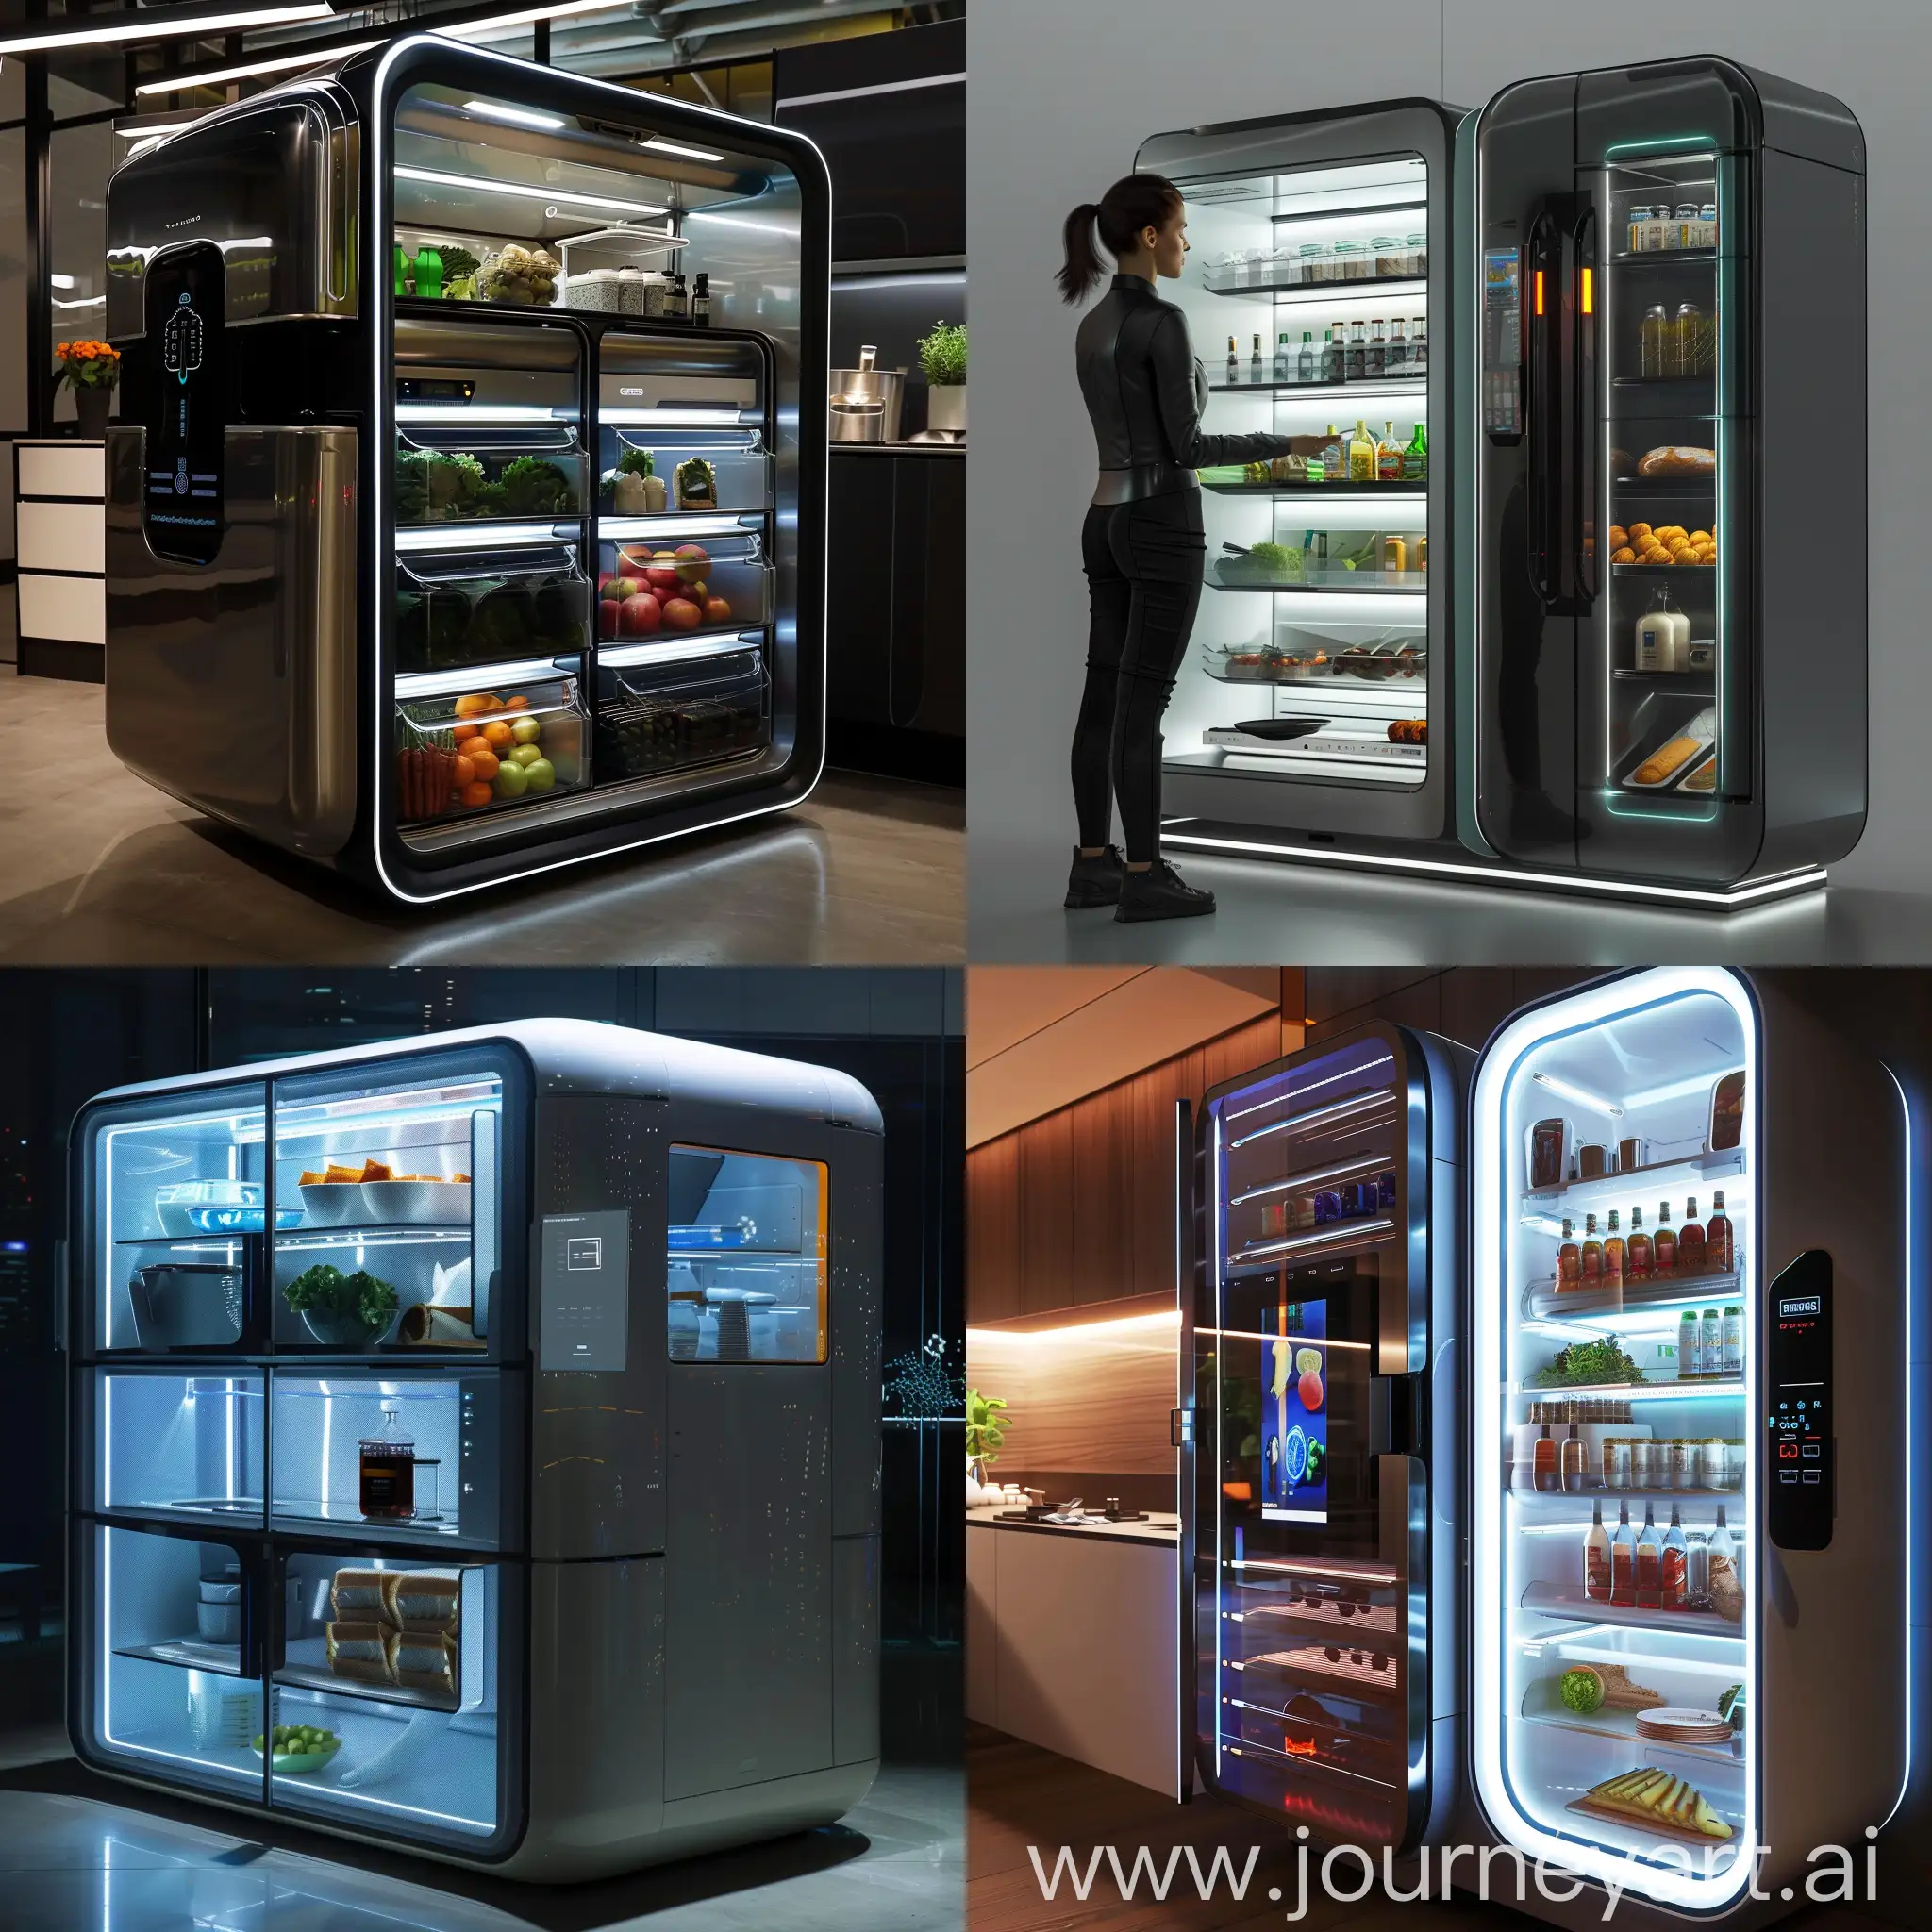 Futuristic-Smart-Fridge-with-3D-Food-Printing-and-Interactive-Recipe-Displays